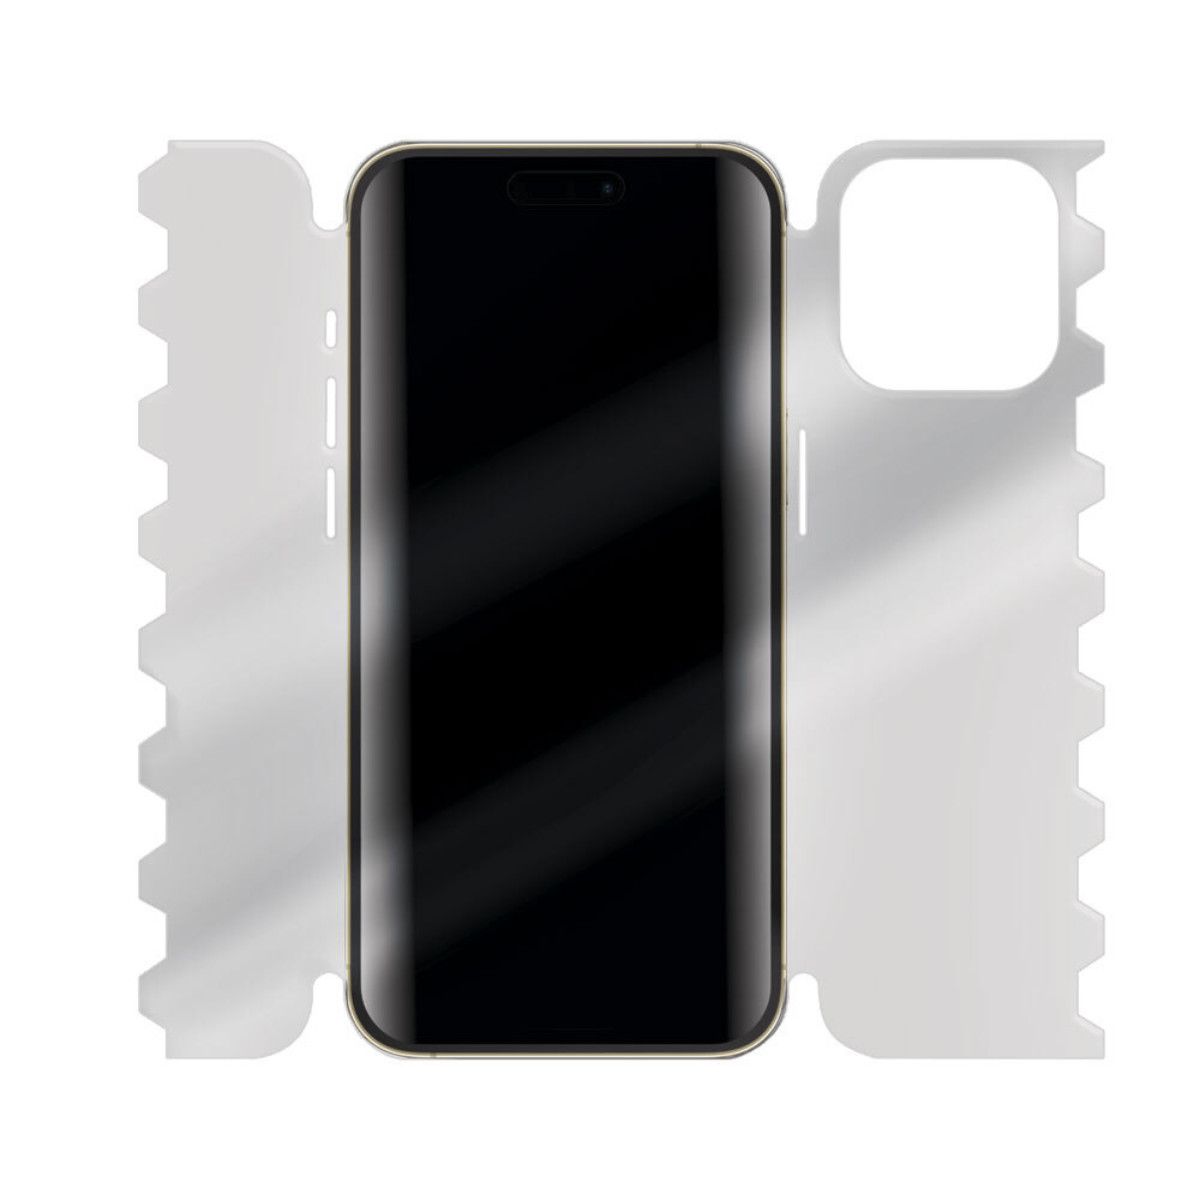 Película X-one 7h 4ª Geração Extreme Full iPhone 13 Pro Max – Loja Smart Cel